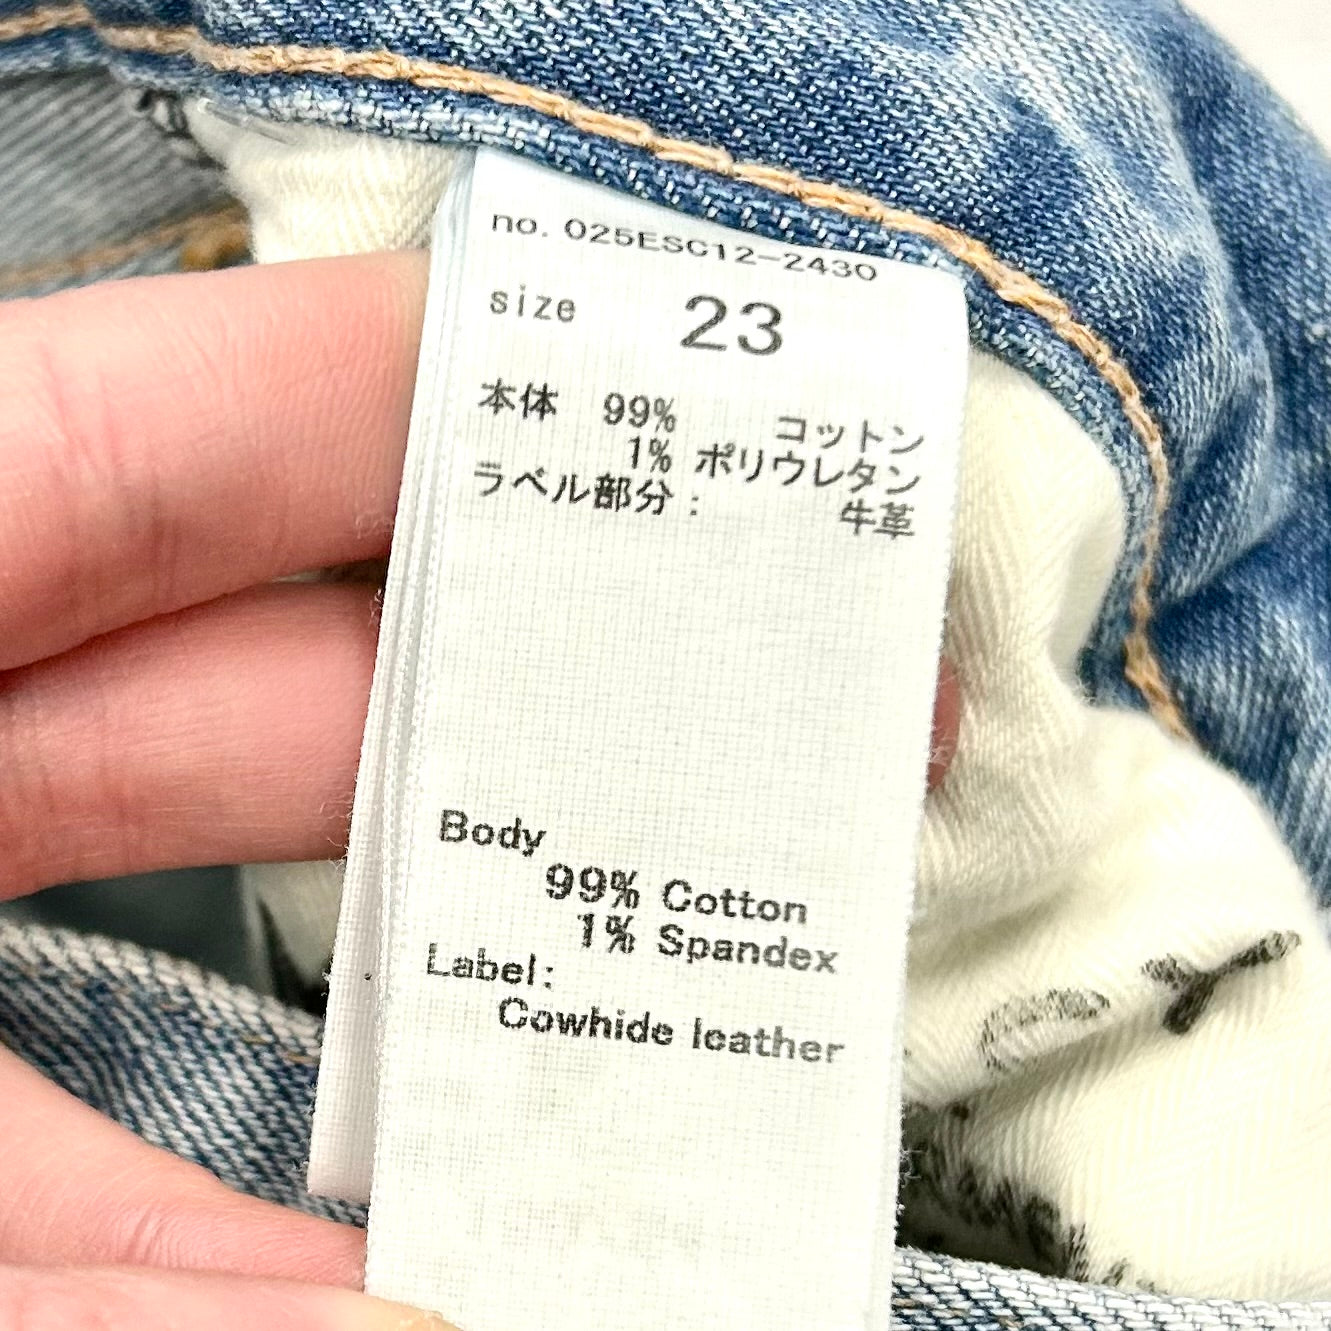 Jeans Designer By Moussy Vintage Size: 00